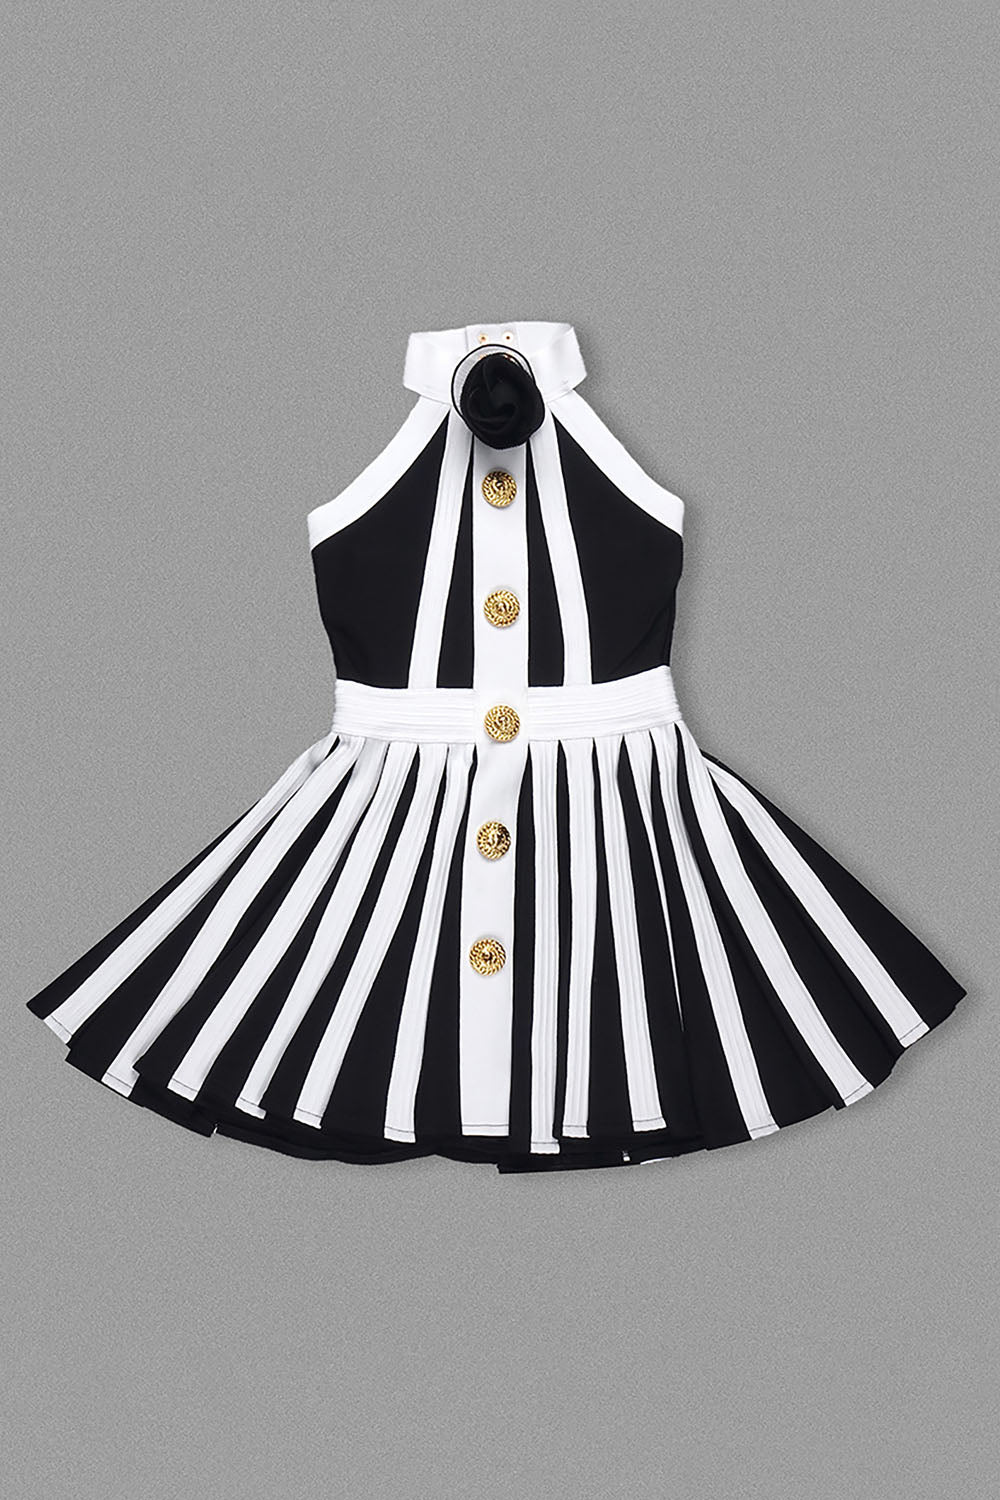 Halter Backless Mini A-line Dress